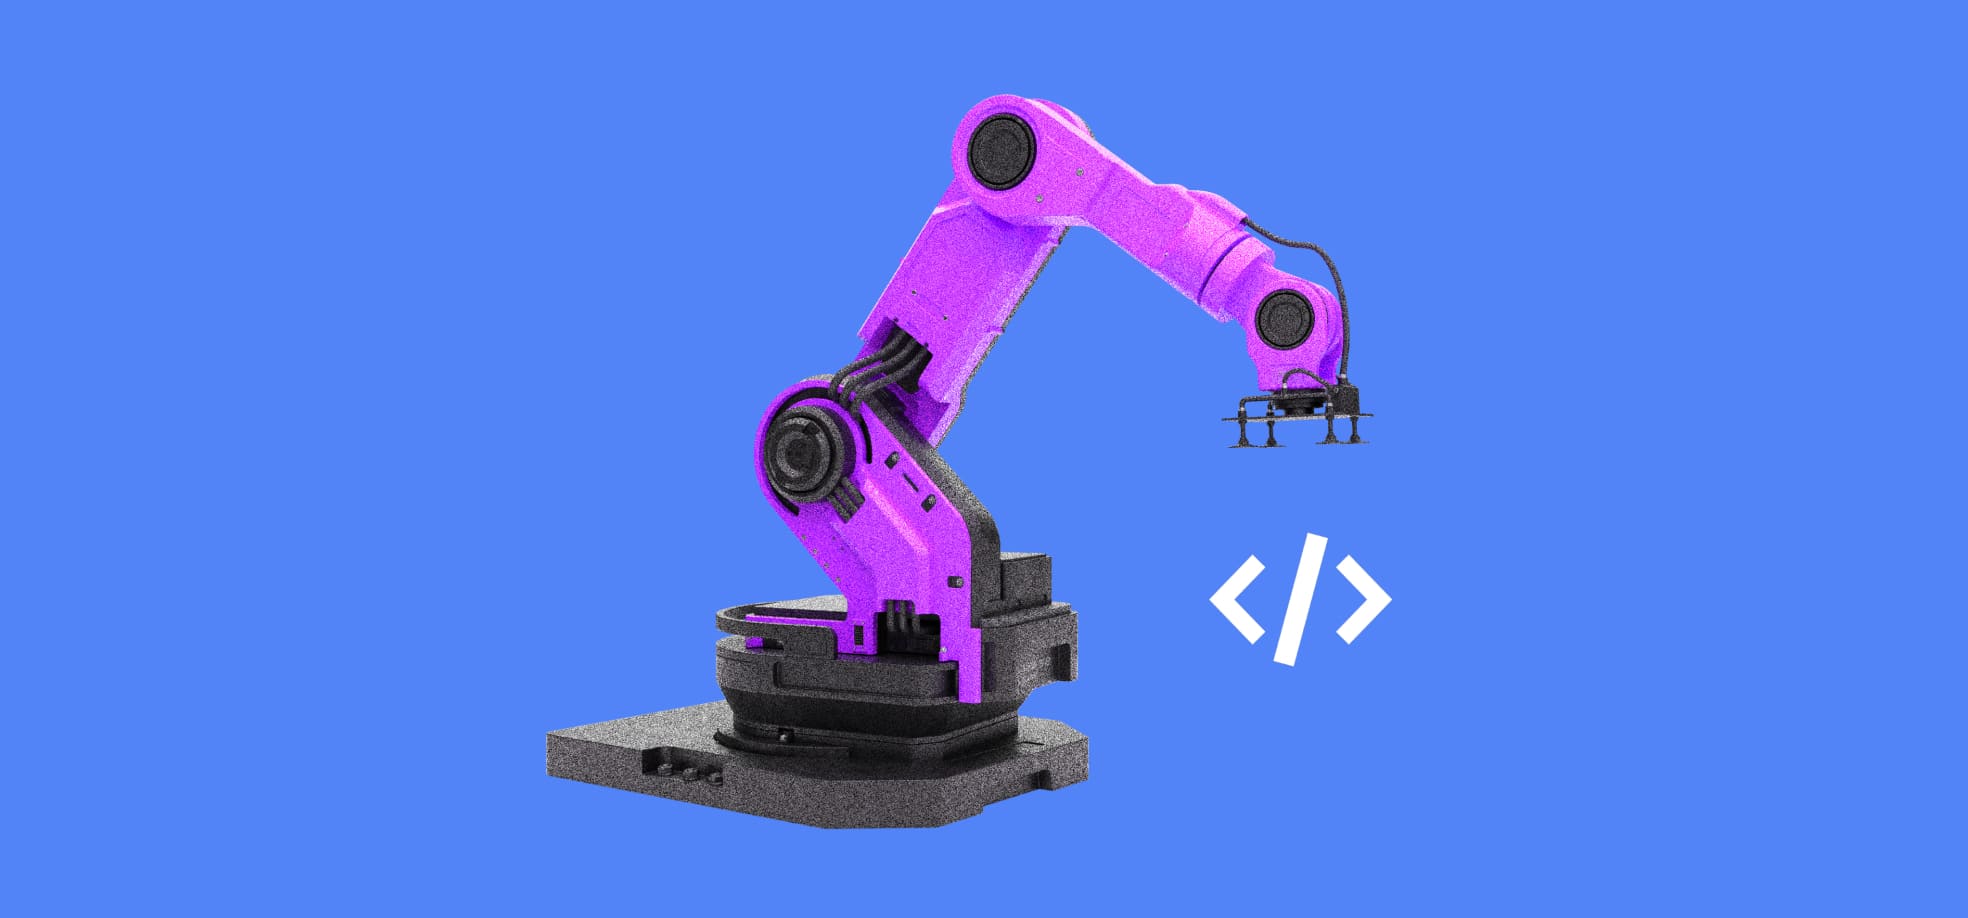 Robot hand on a blue background illustration